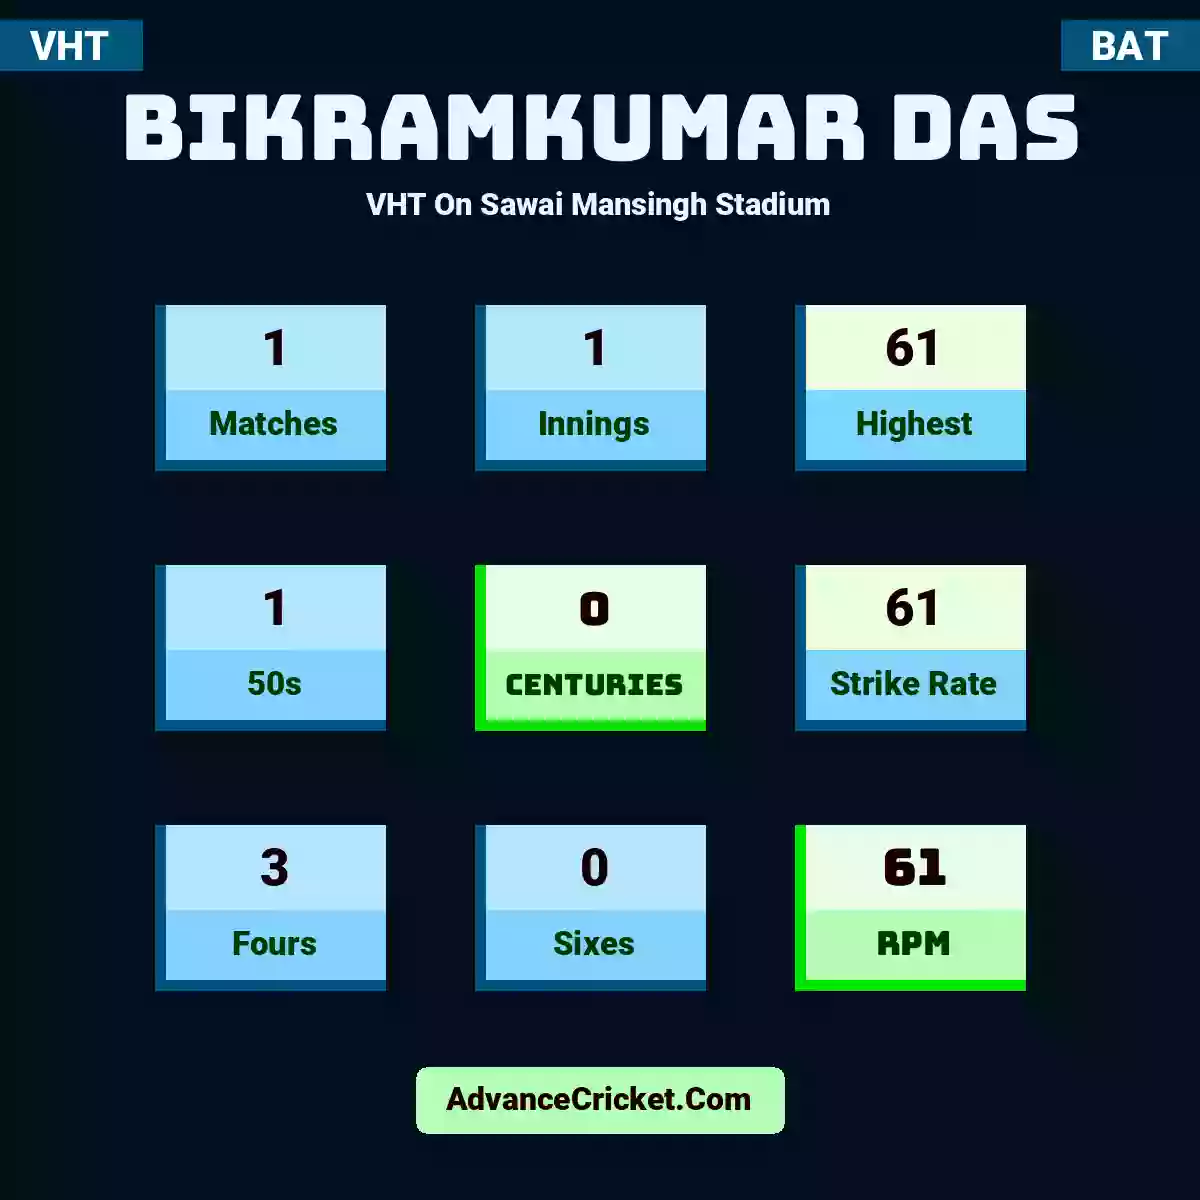 Bikramkumar Das VHT  On Sawai Mansingh Stadium, Bikramkumar Das played 1 matches, scored 61 runs as highest, 1 half-centuries, and 0 centuries, with a strike rate of 61. B.Das hit 3 fours and 0 sixes, with an RPM of 61.